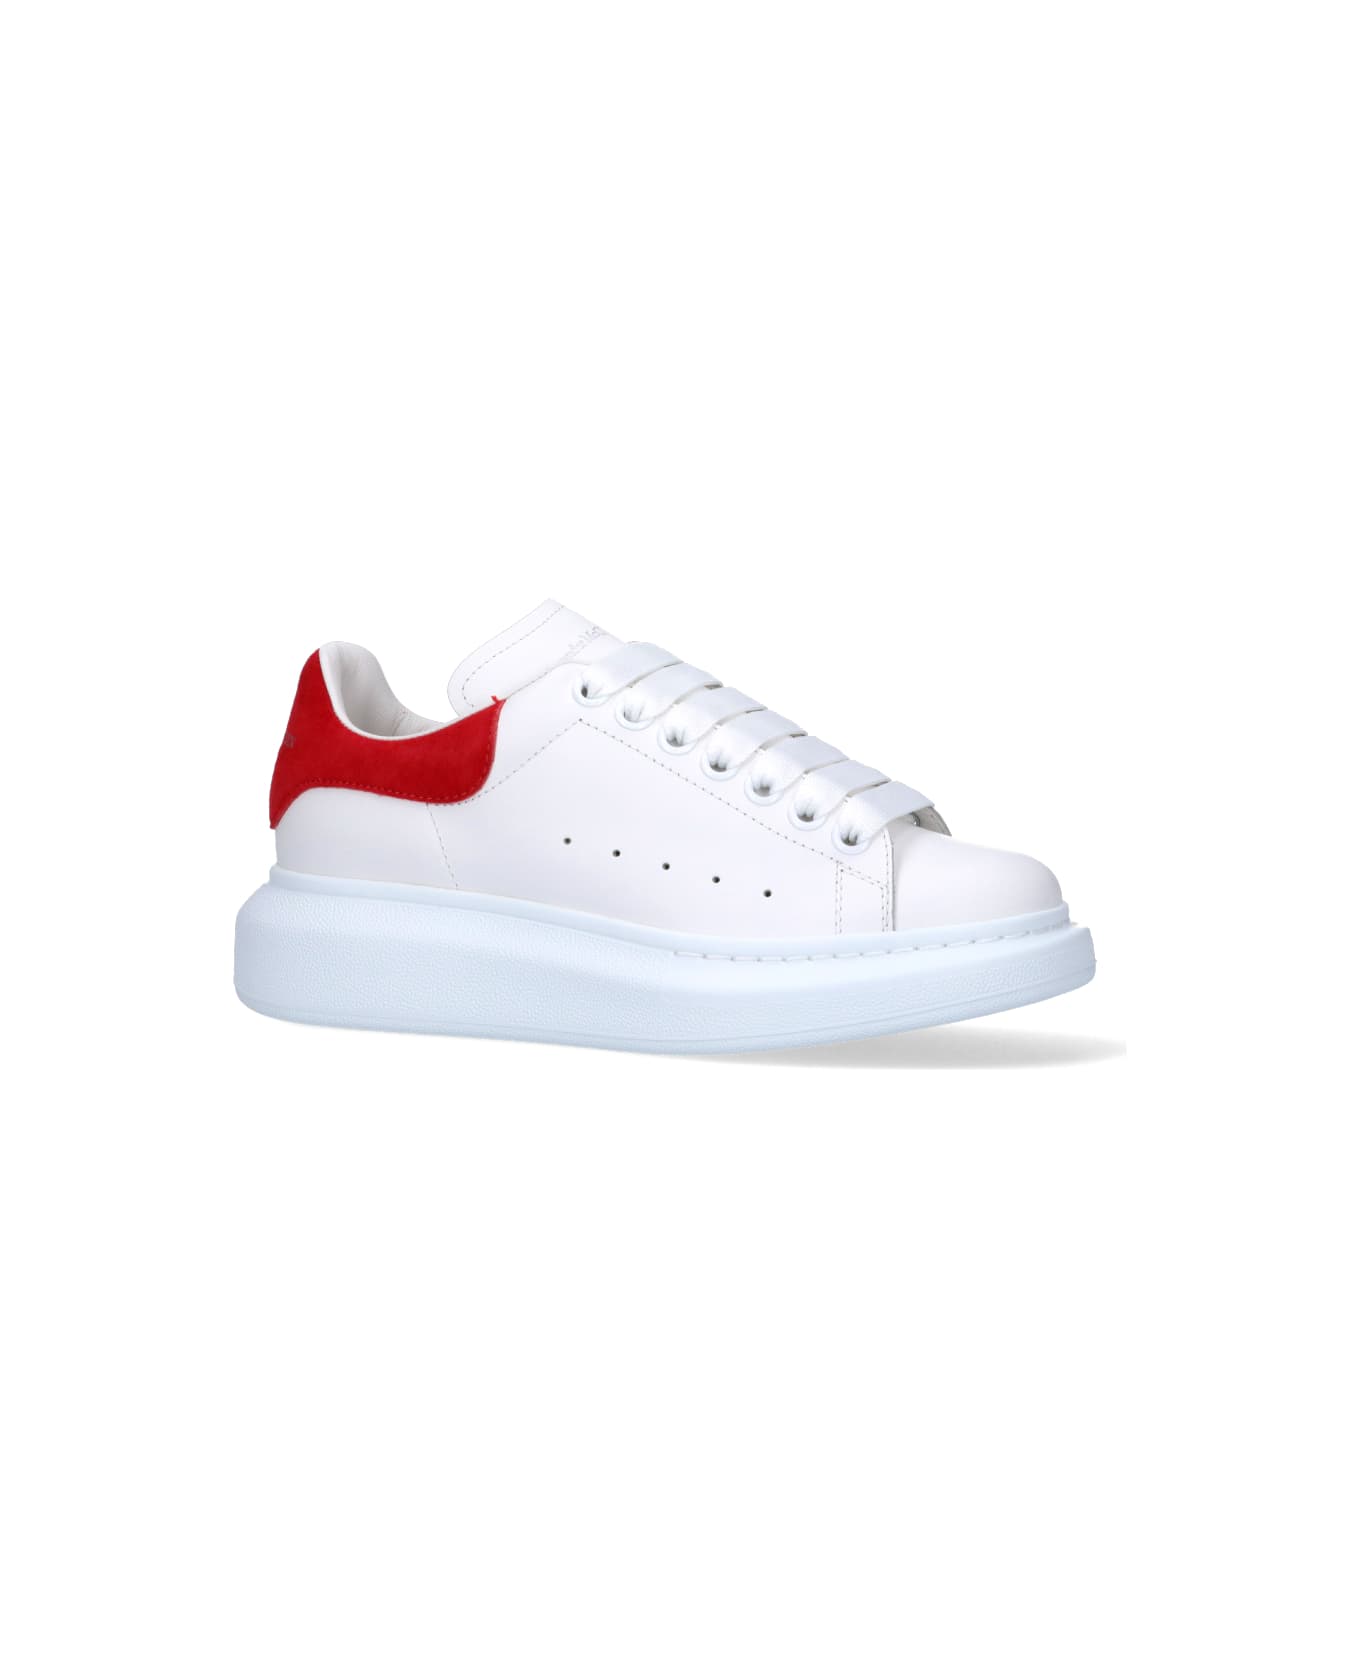 Alexander McQueen Oversized Sole Sneakers - White